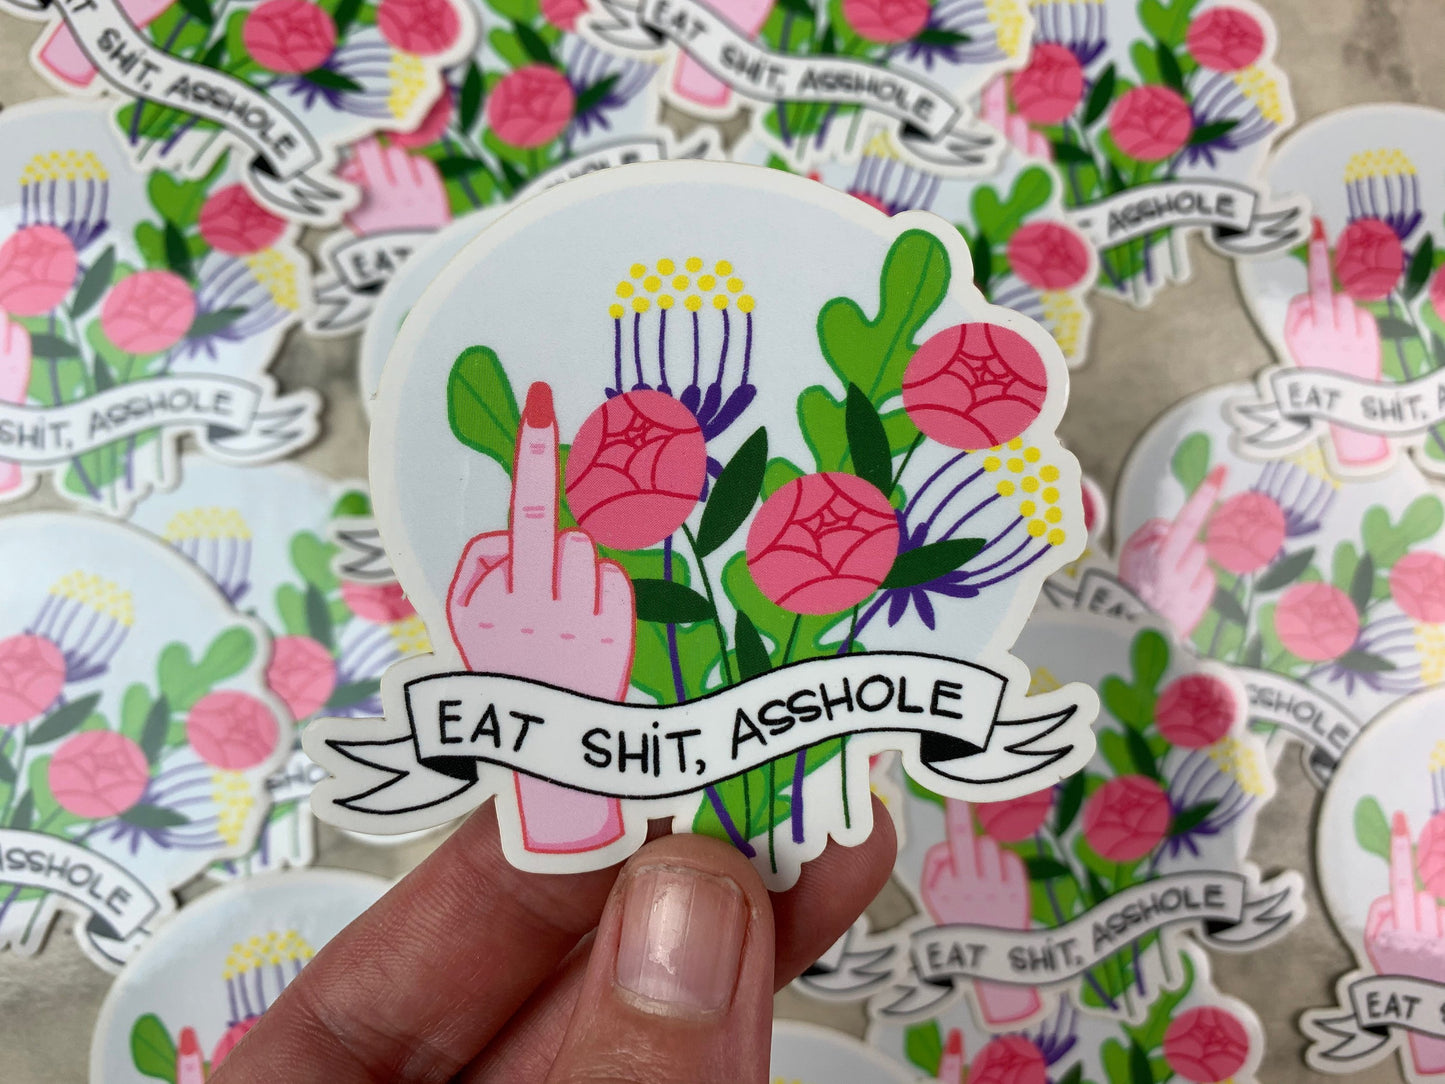 Anger Bouquet Series: “Eat Shit, Asshole” Sticker